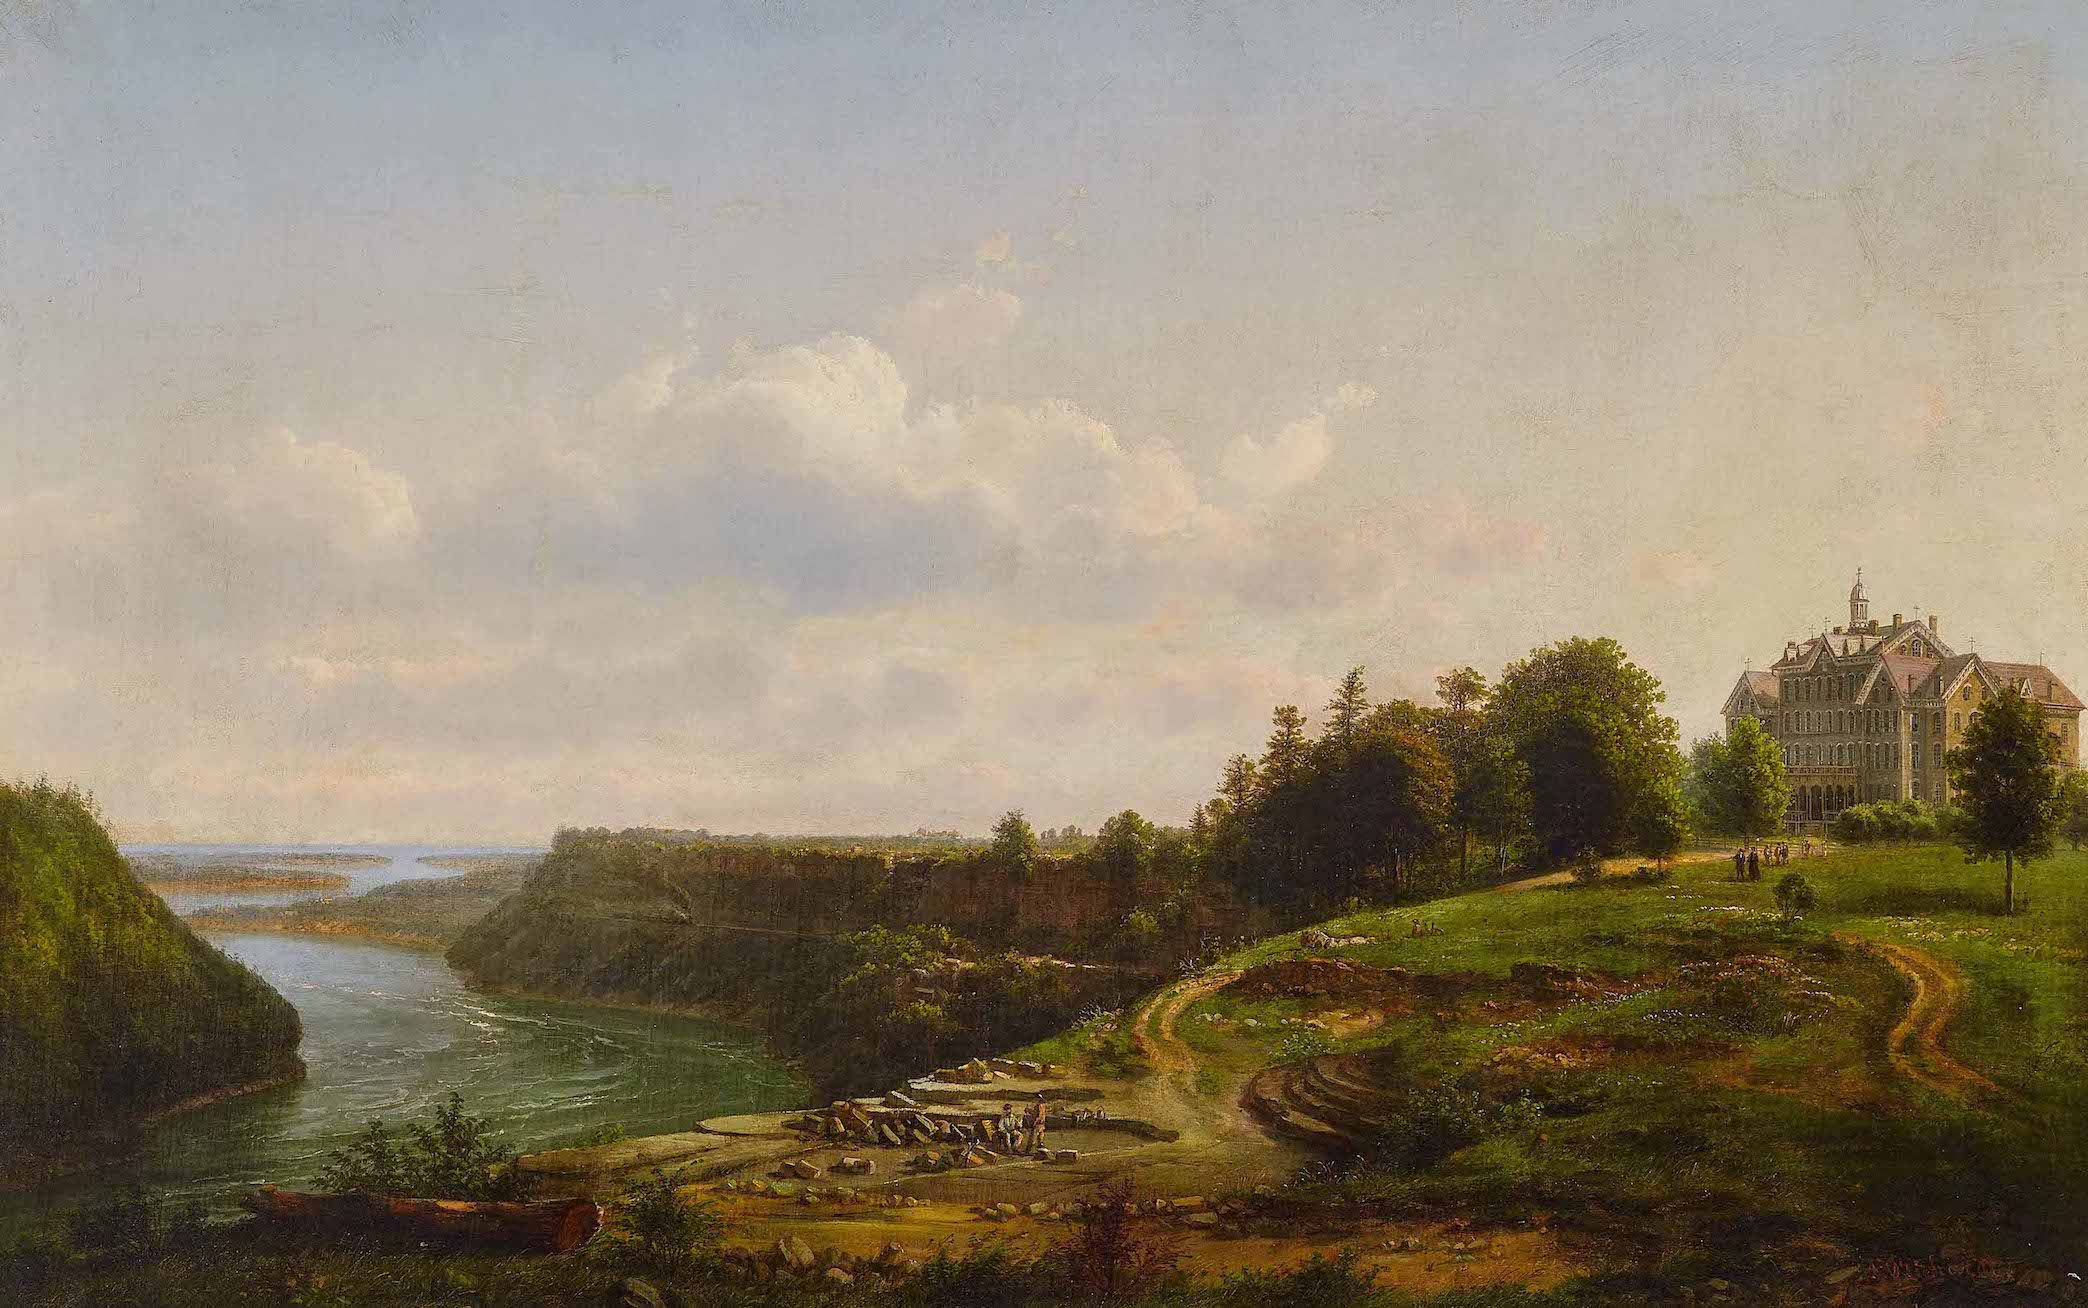 Joachim Ferdinand Richardt, `Niagara University,` 1873, oil on canvas. Collection of Castellani Art Museum of Niagara University, 1979.